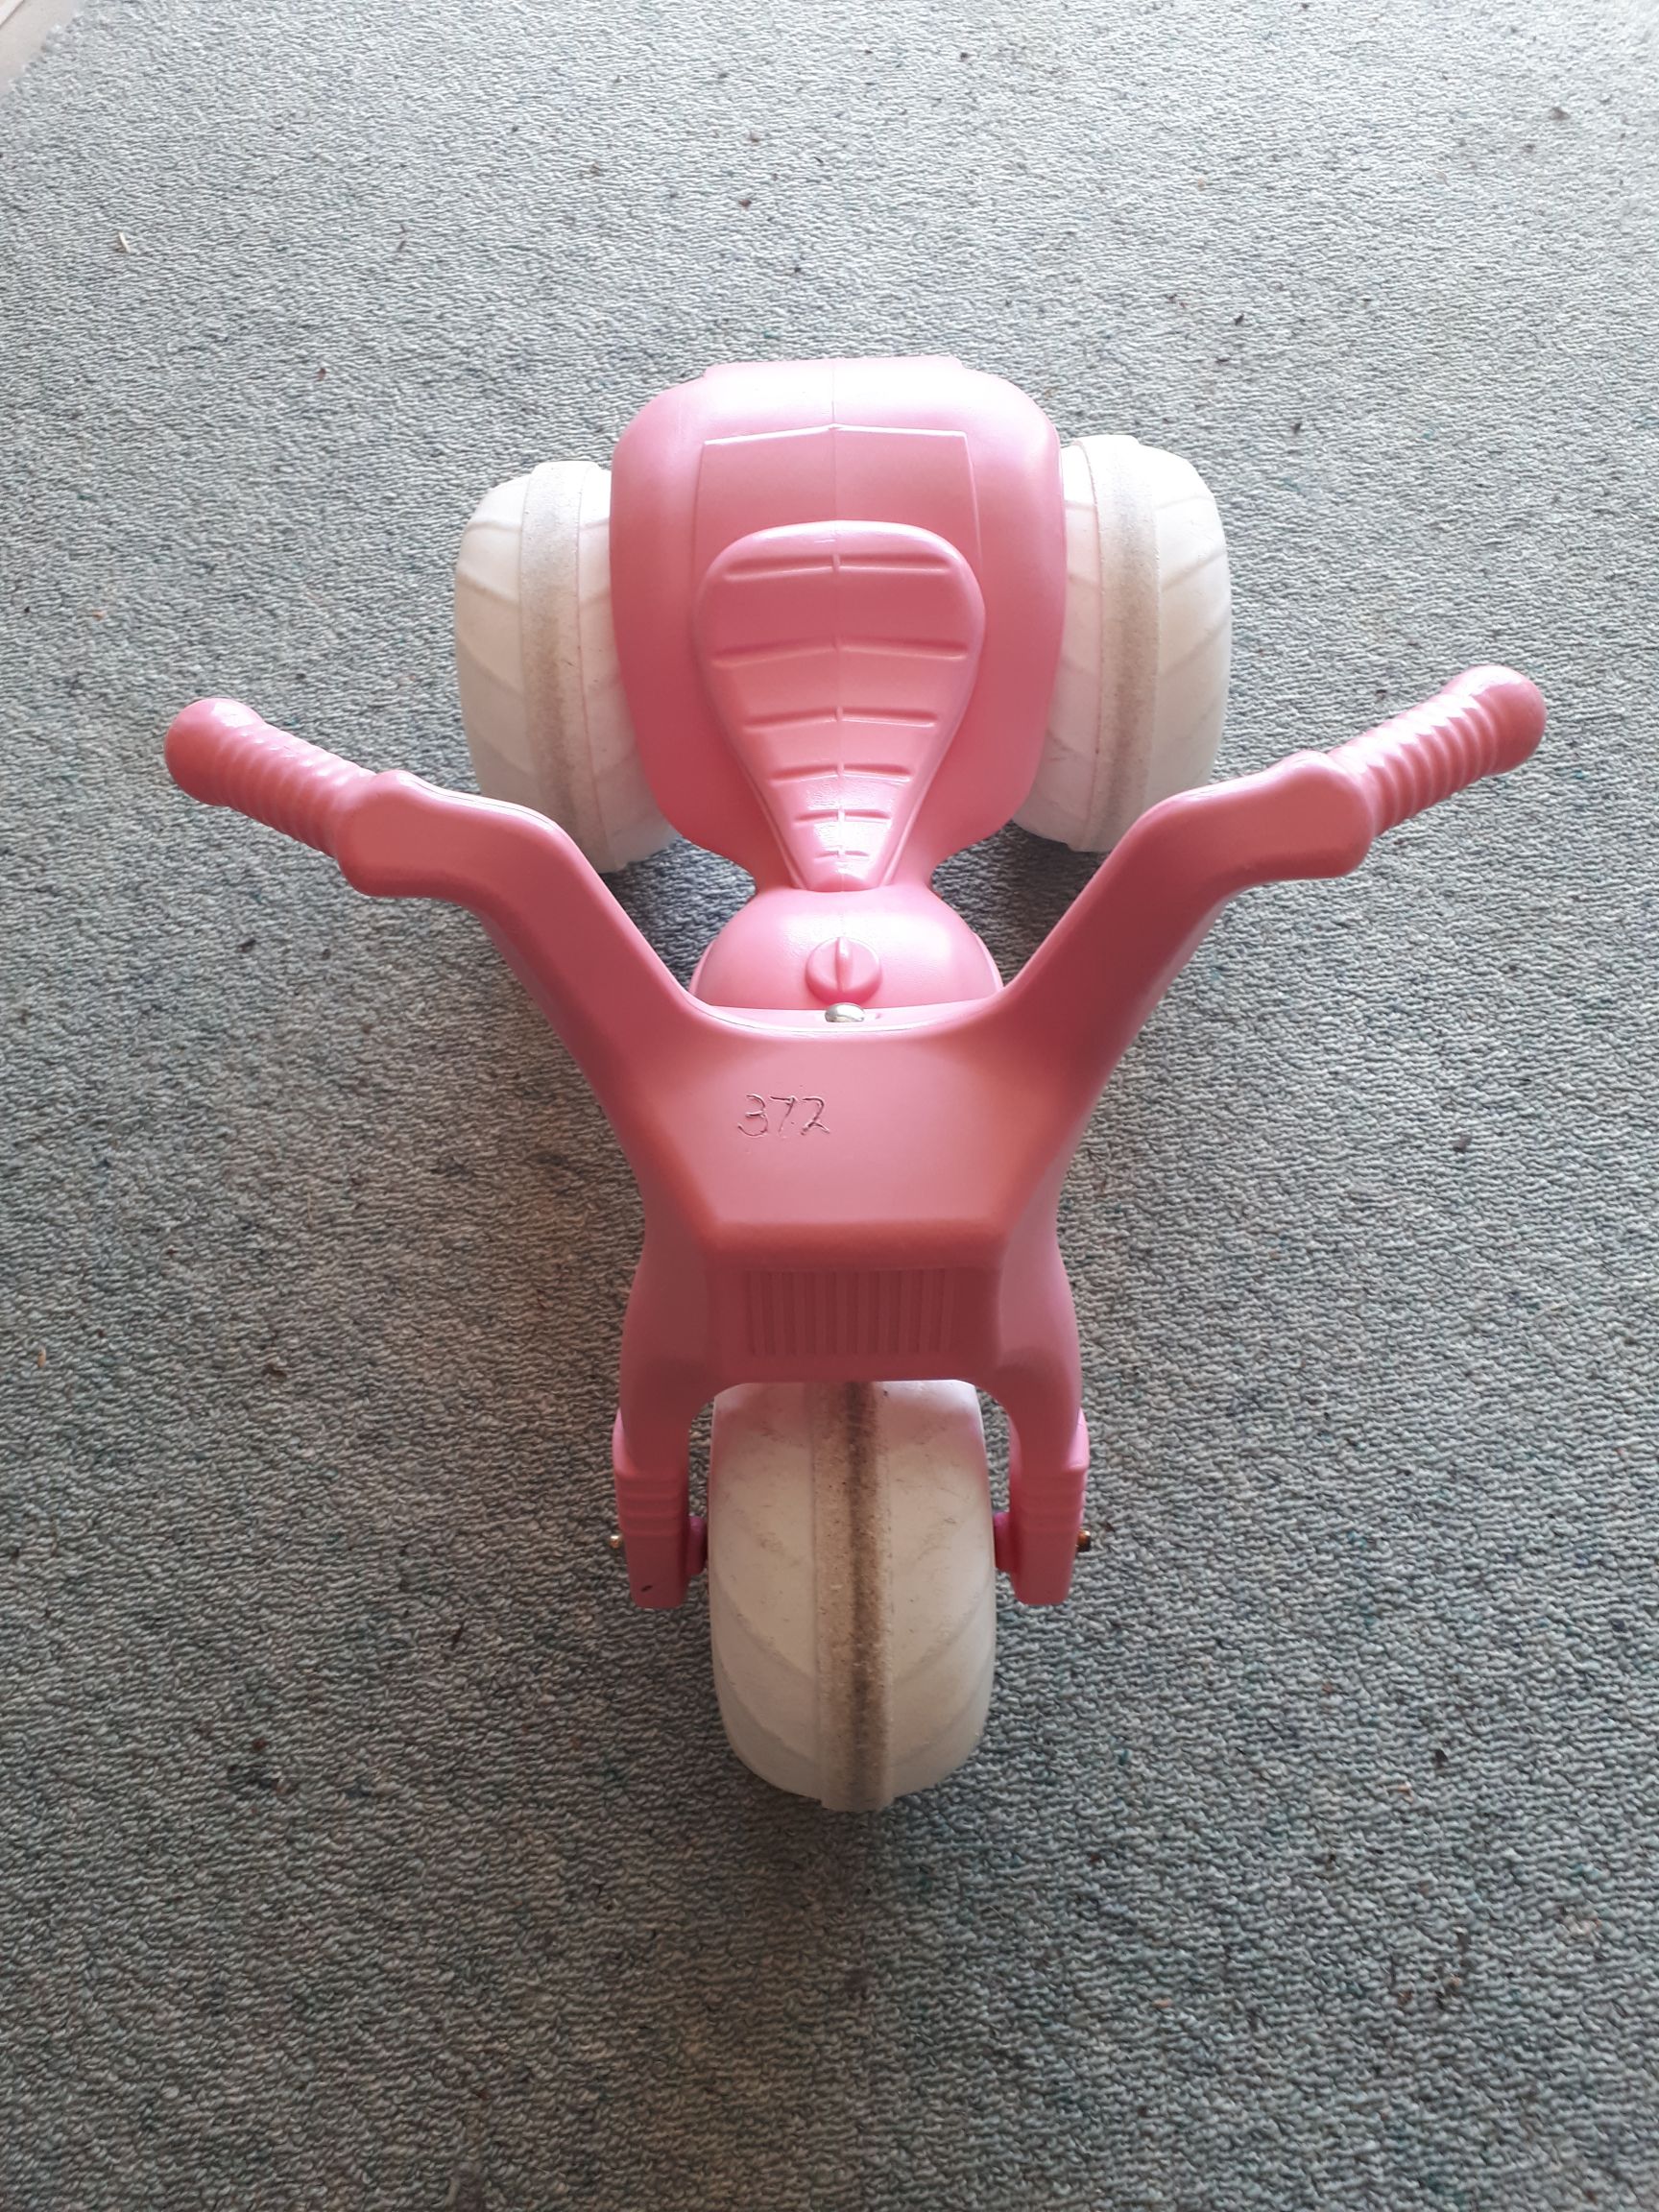 pink 3 wheel bike